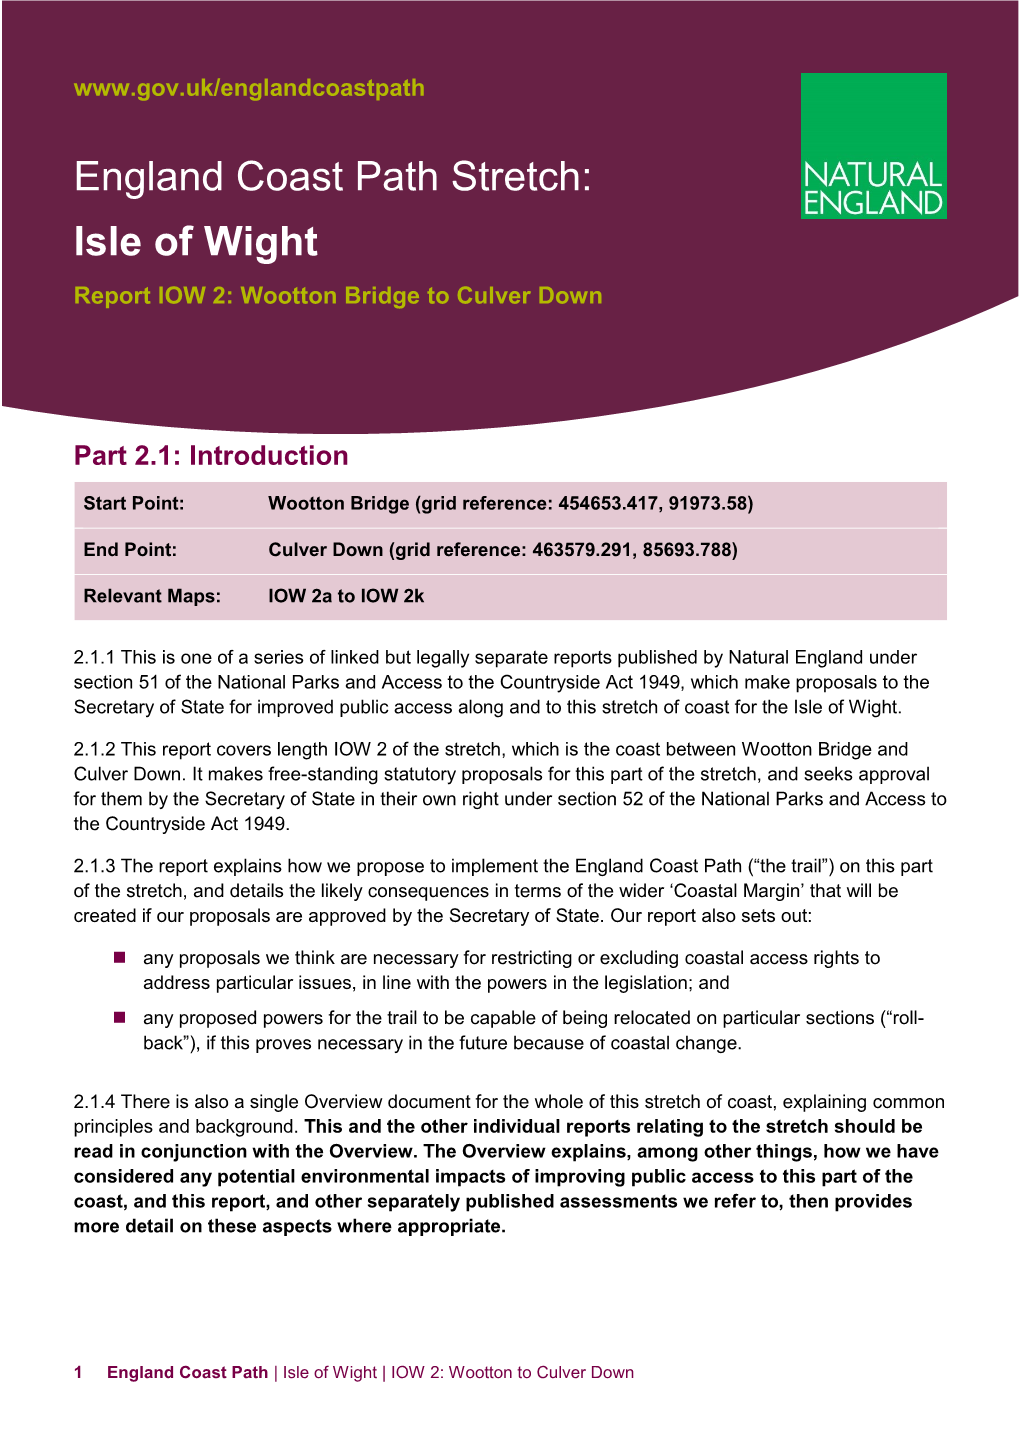 England Coast Path Stretch: Isle of Wight. Report 2: Wootton Bridge To